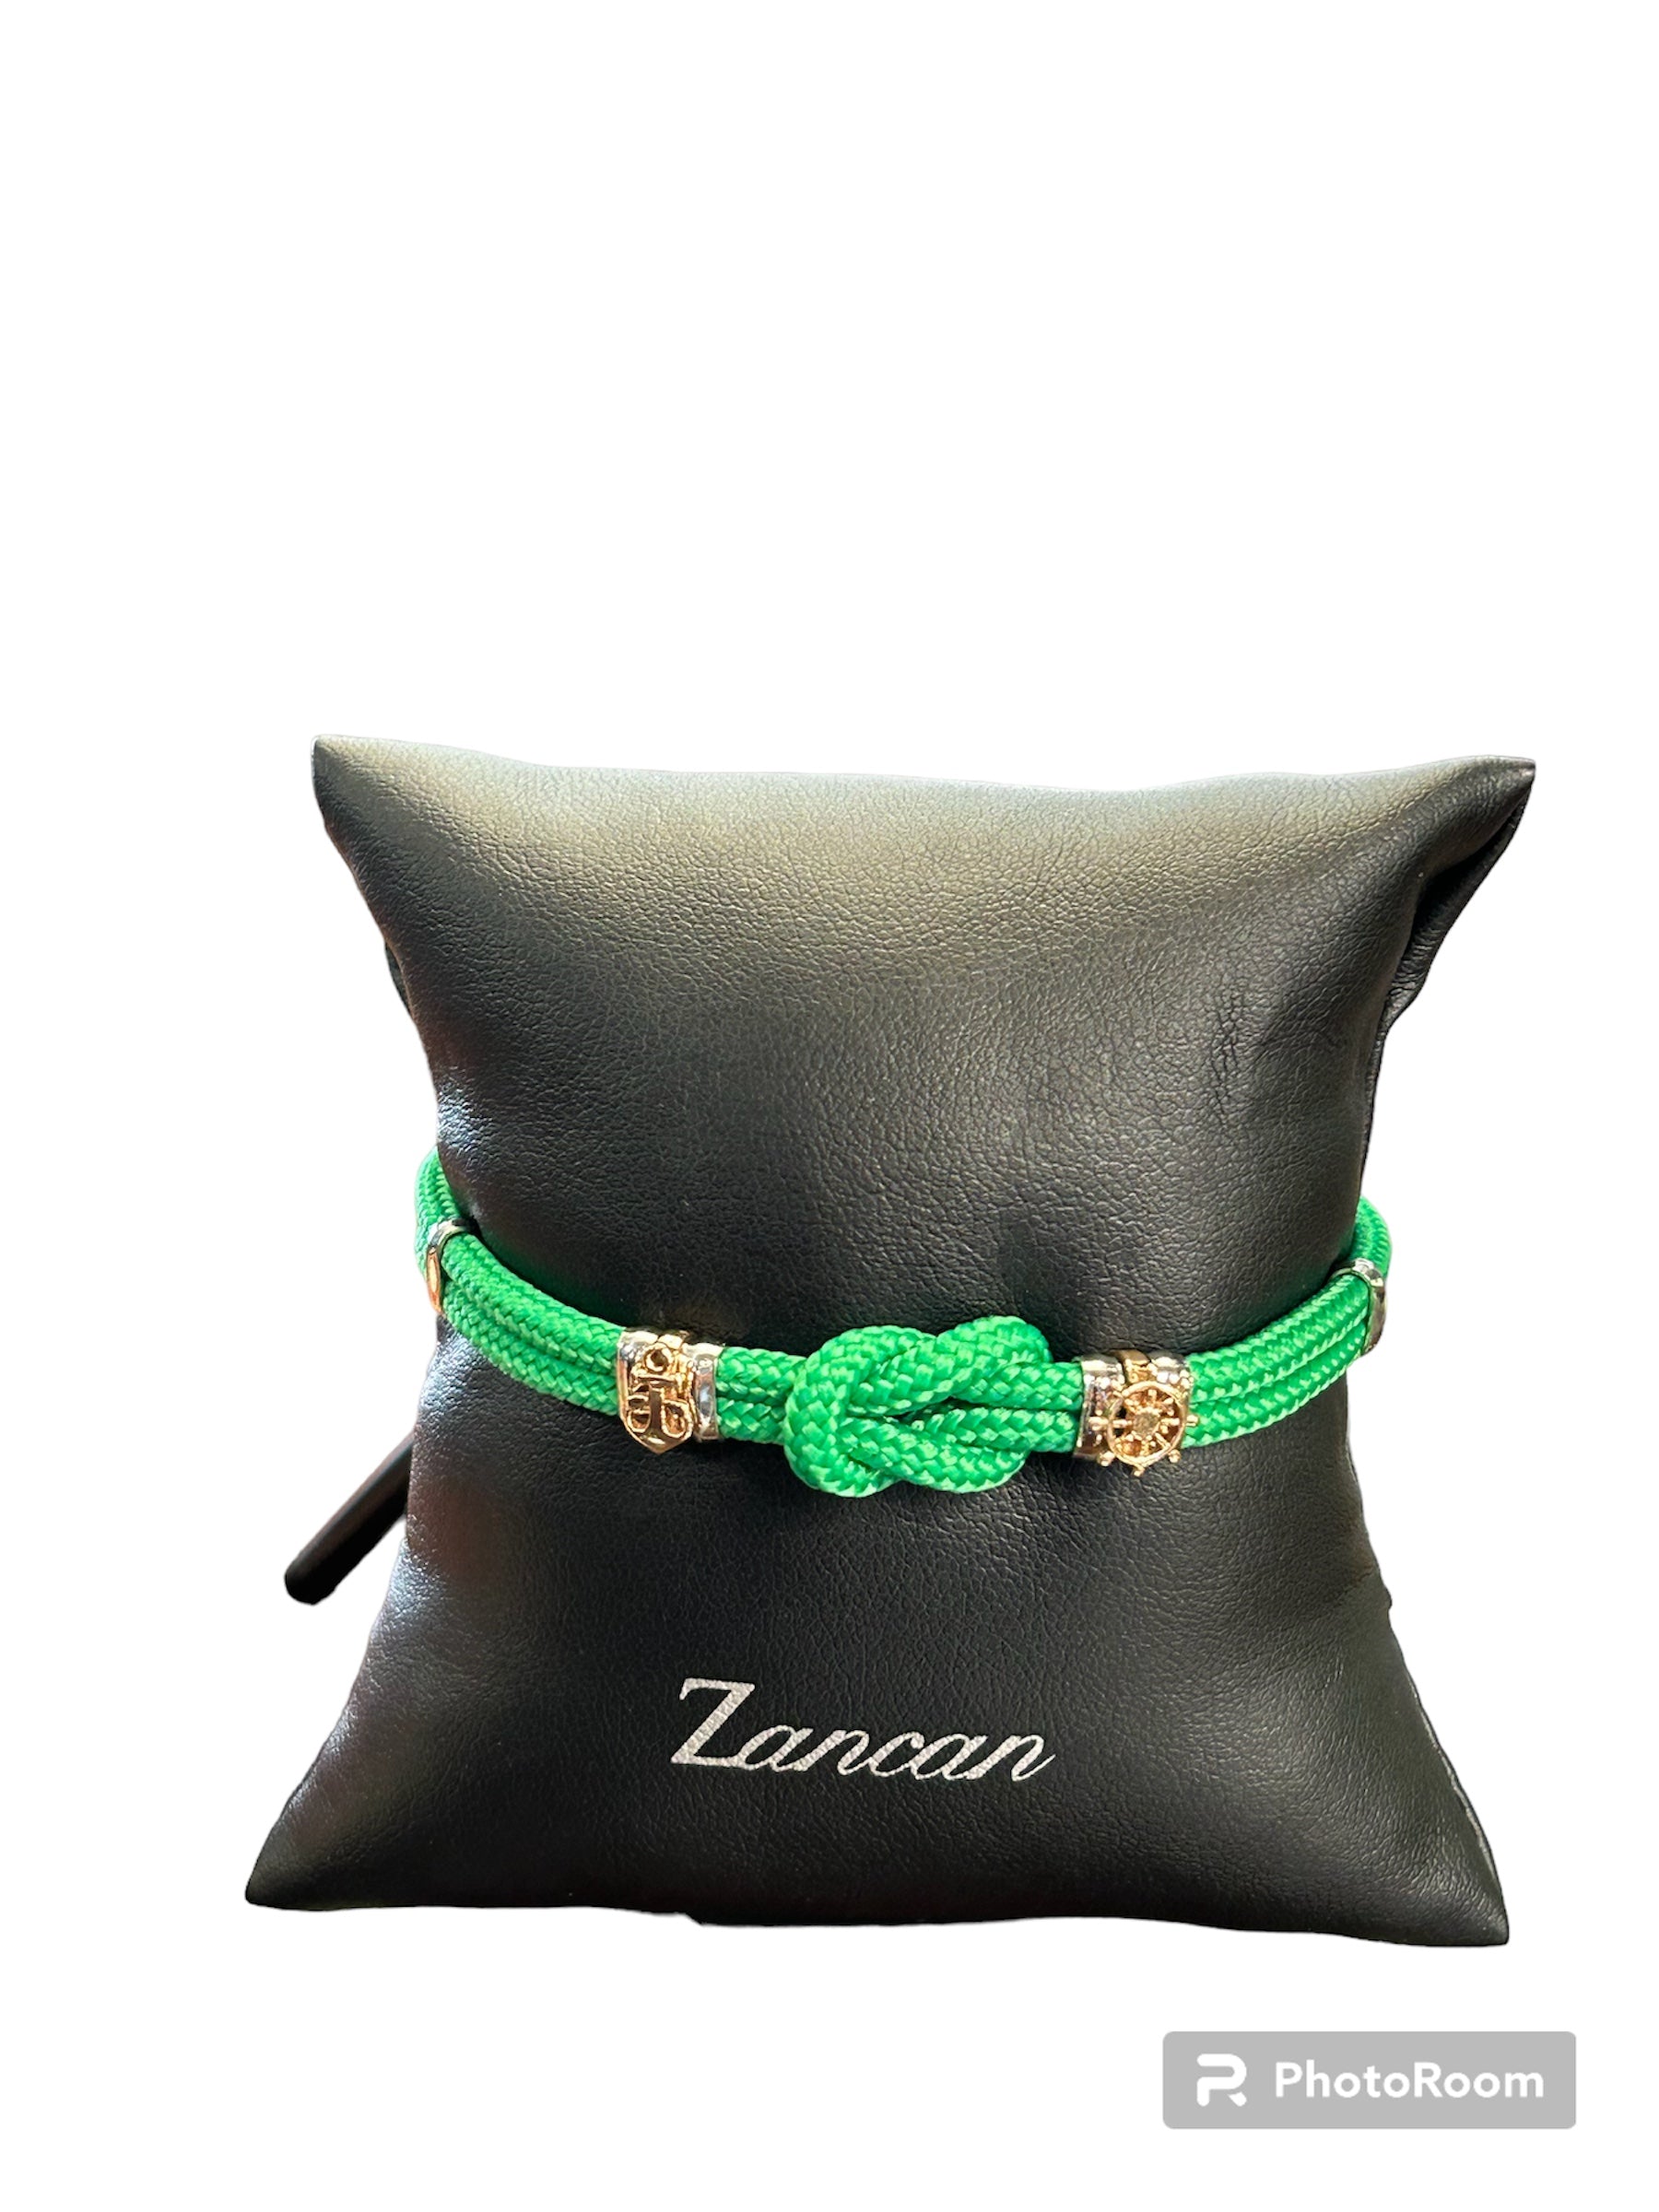 Zancan Regatta Men's Bracelet in Green Kevlar with Nautical Knot and Silver Symbols - ESB276-VE